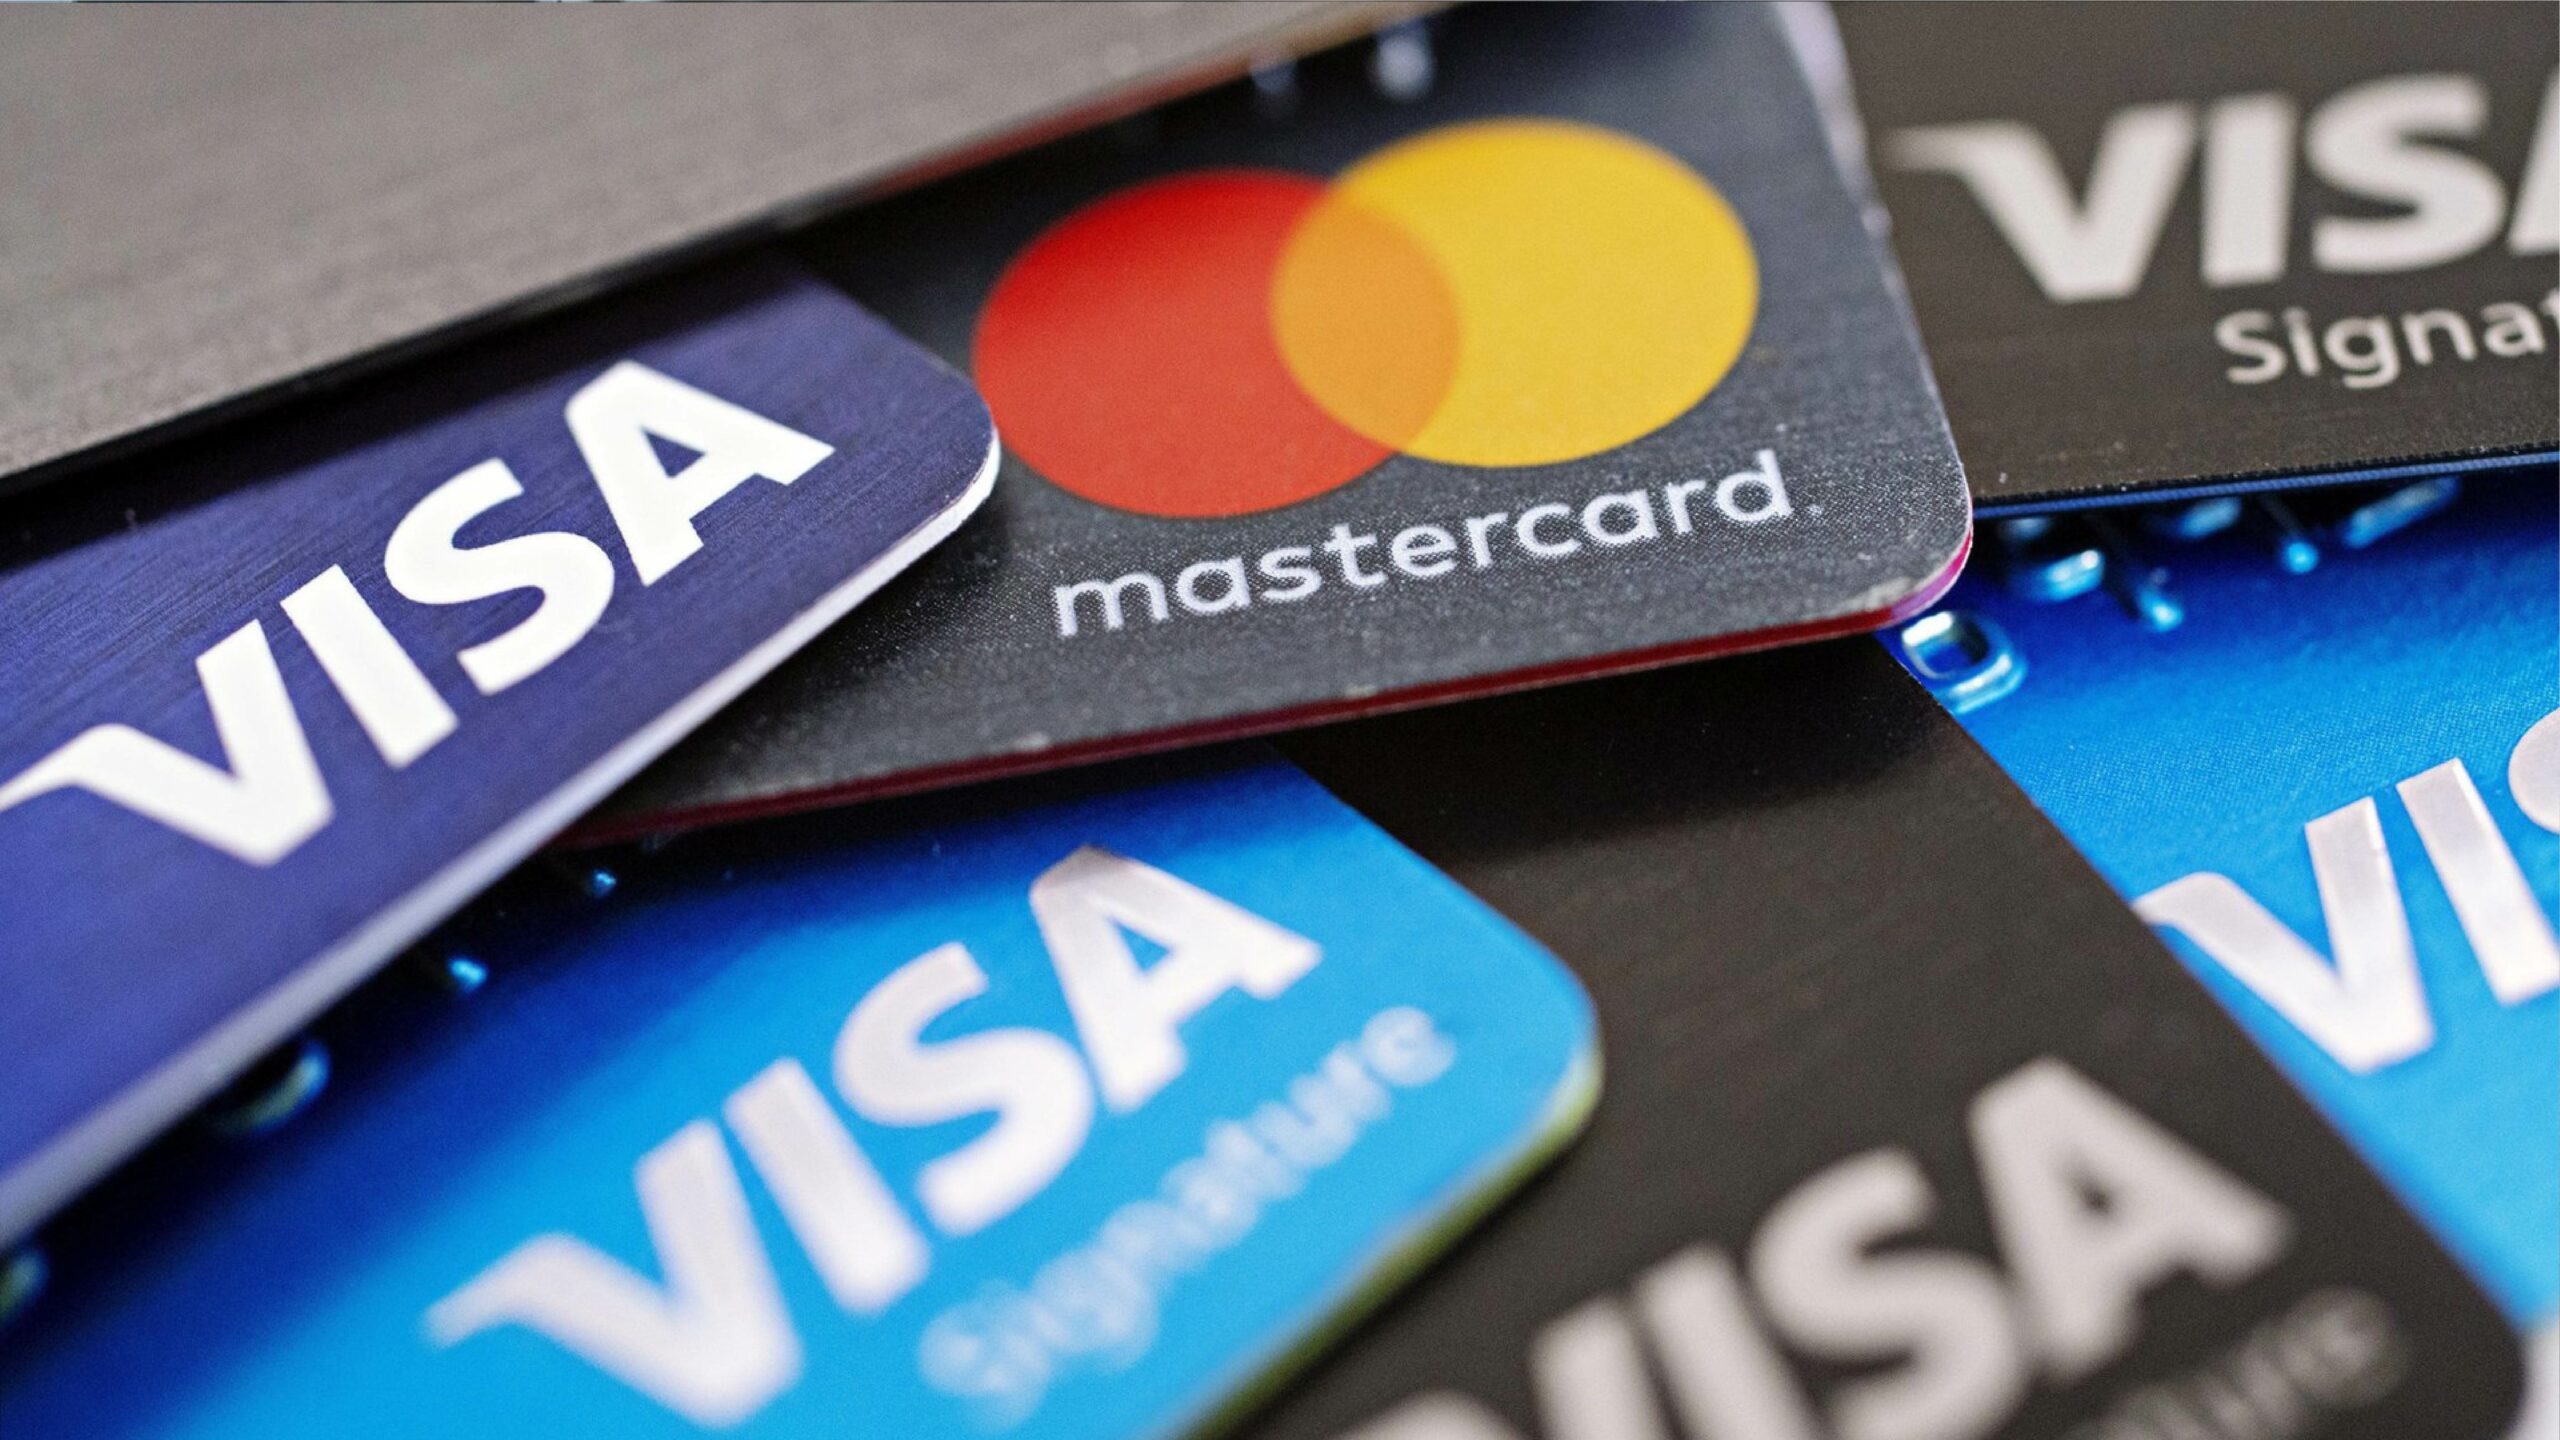 Mastercard: A debit card, Visa, Famous banking products. 2560x1440 HD Wallpaper.